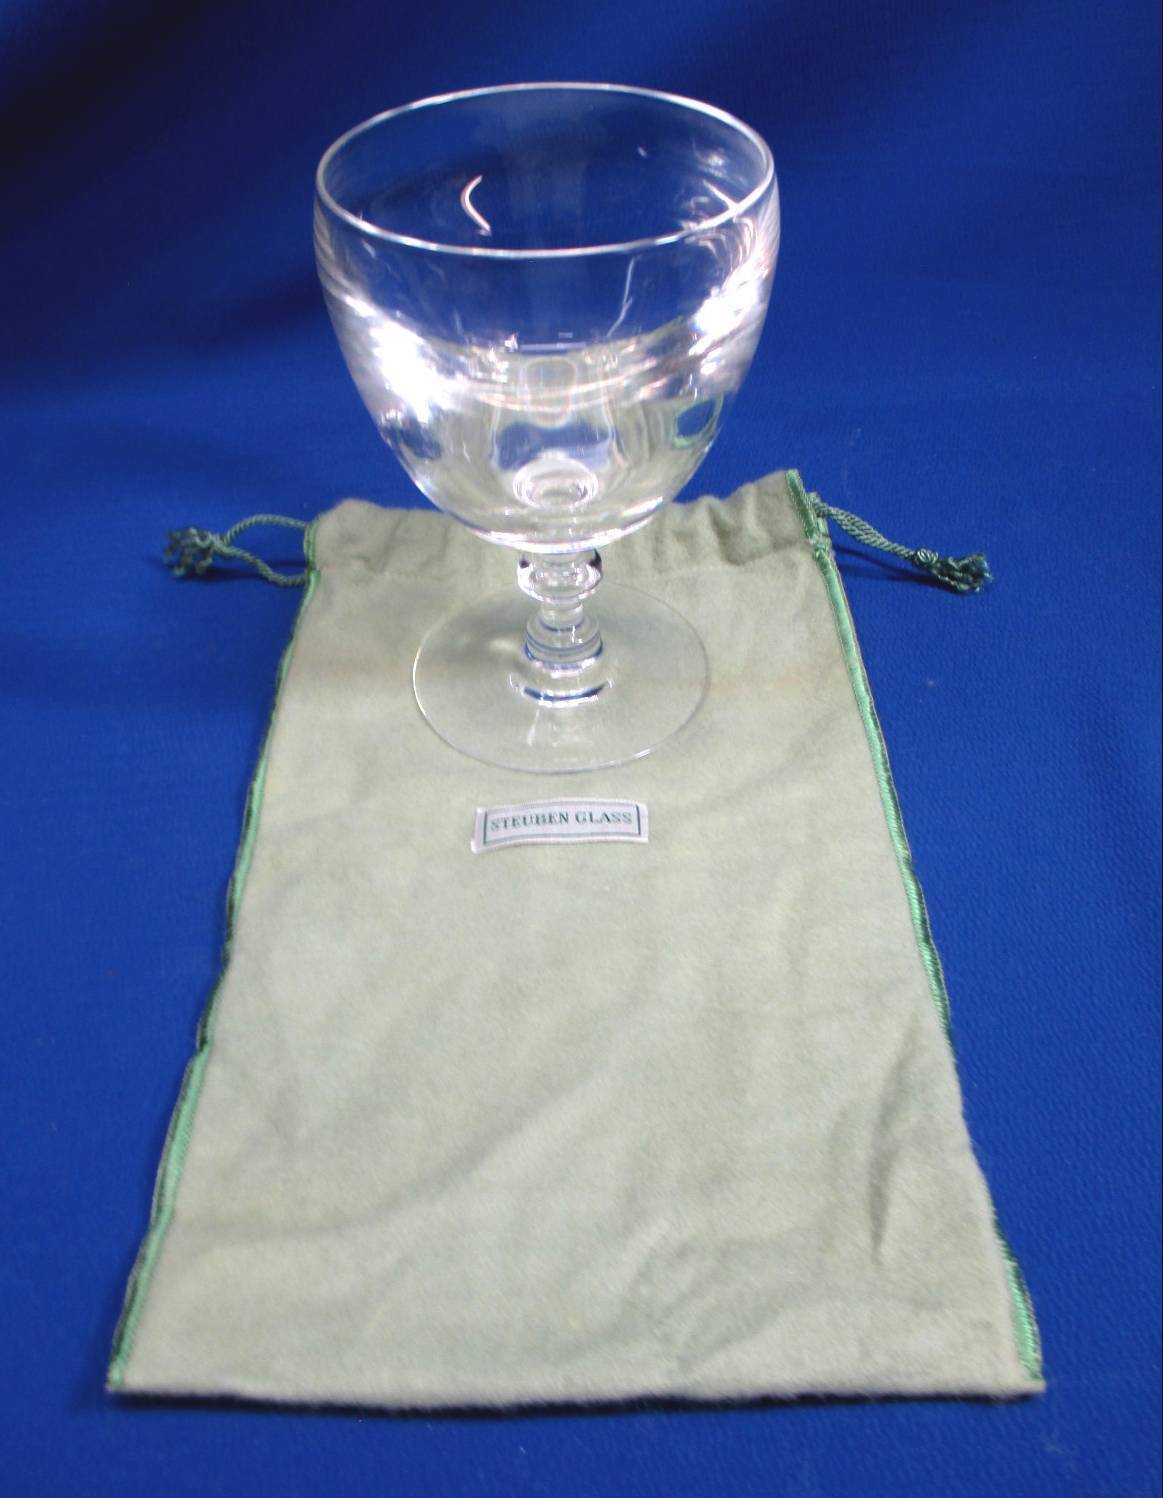 STEUBEN GLASS GOBLET W/ ORIGINAL FELT STORAGE BAG